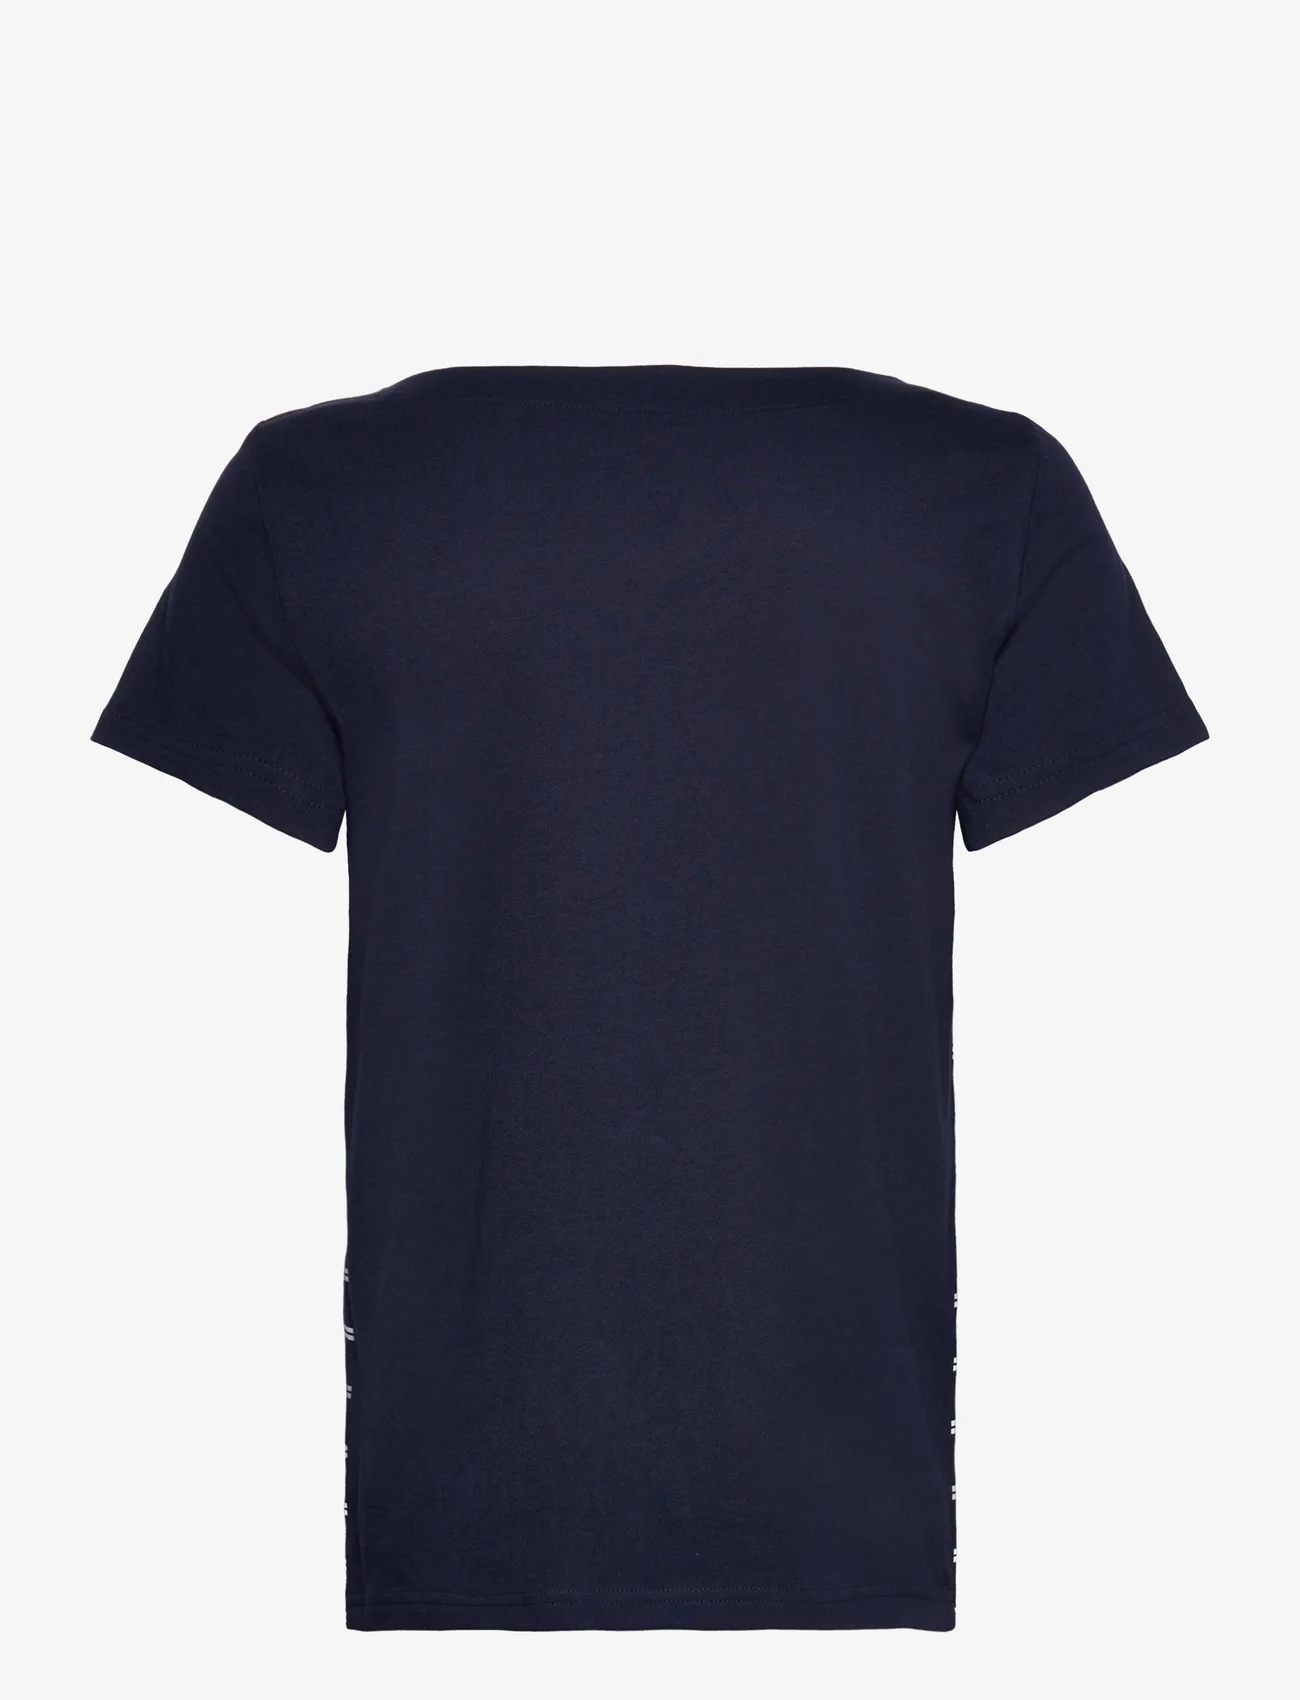 Tom Tailor - T-shirt boat neck stripe - laagste prijzen - sky captain blue - 1